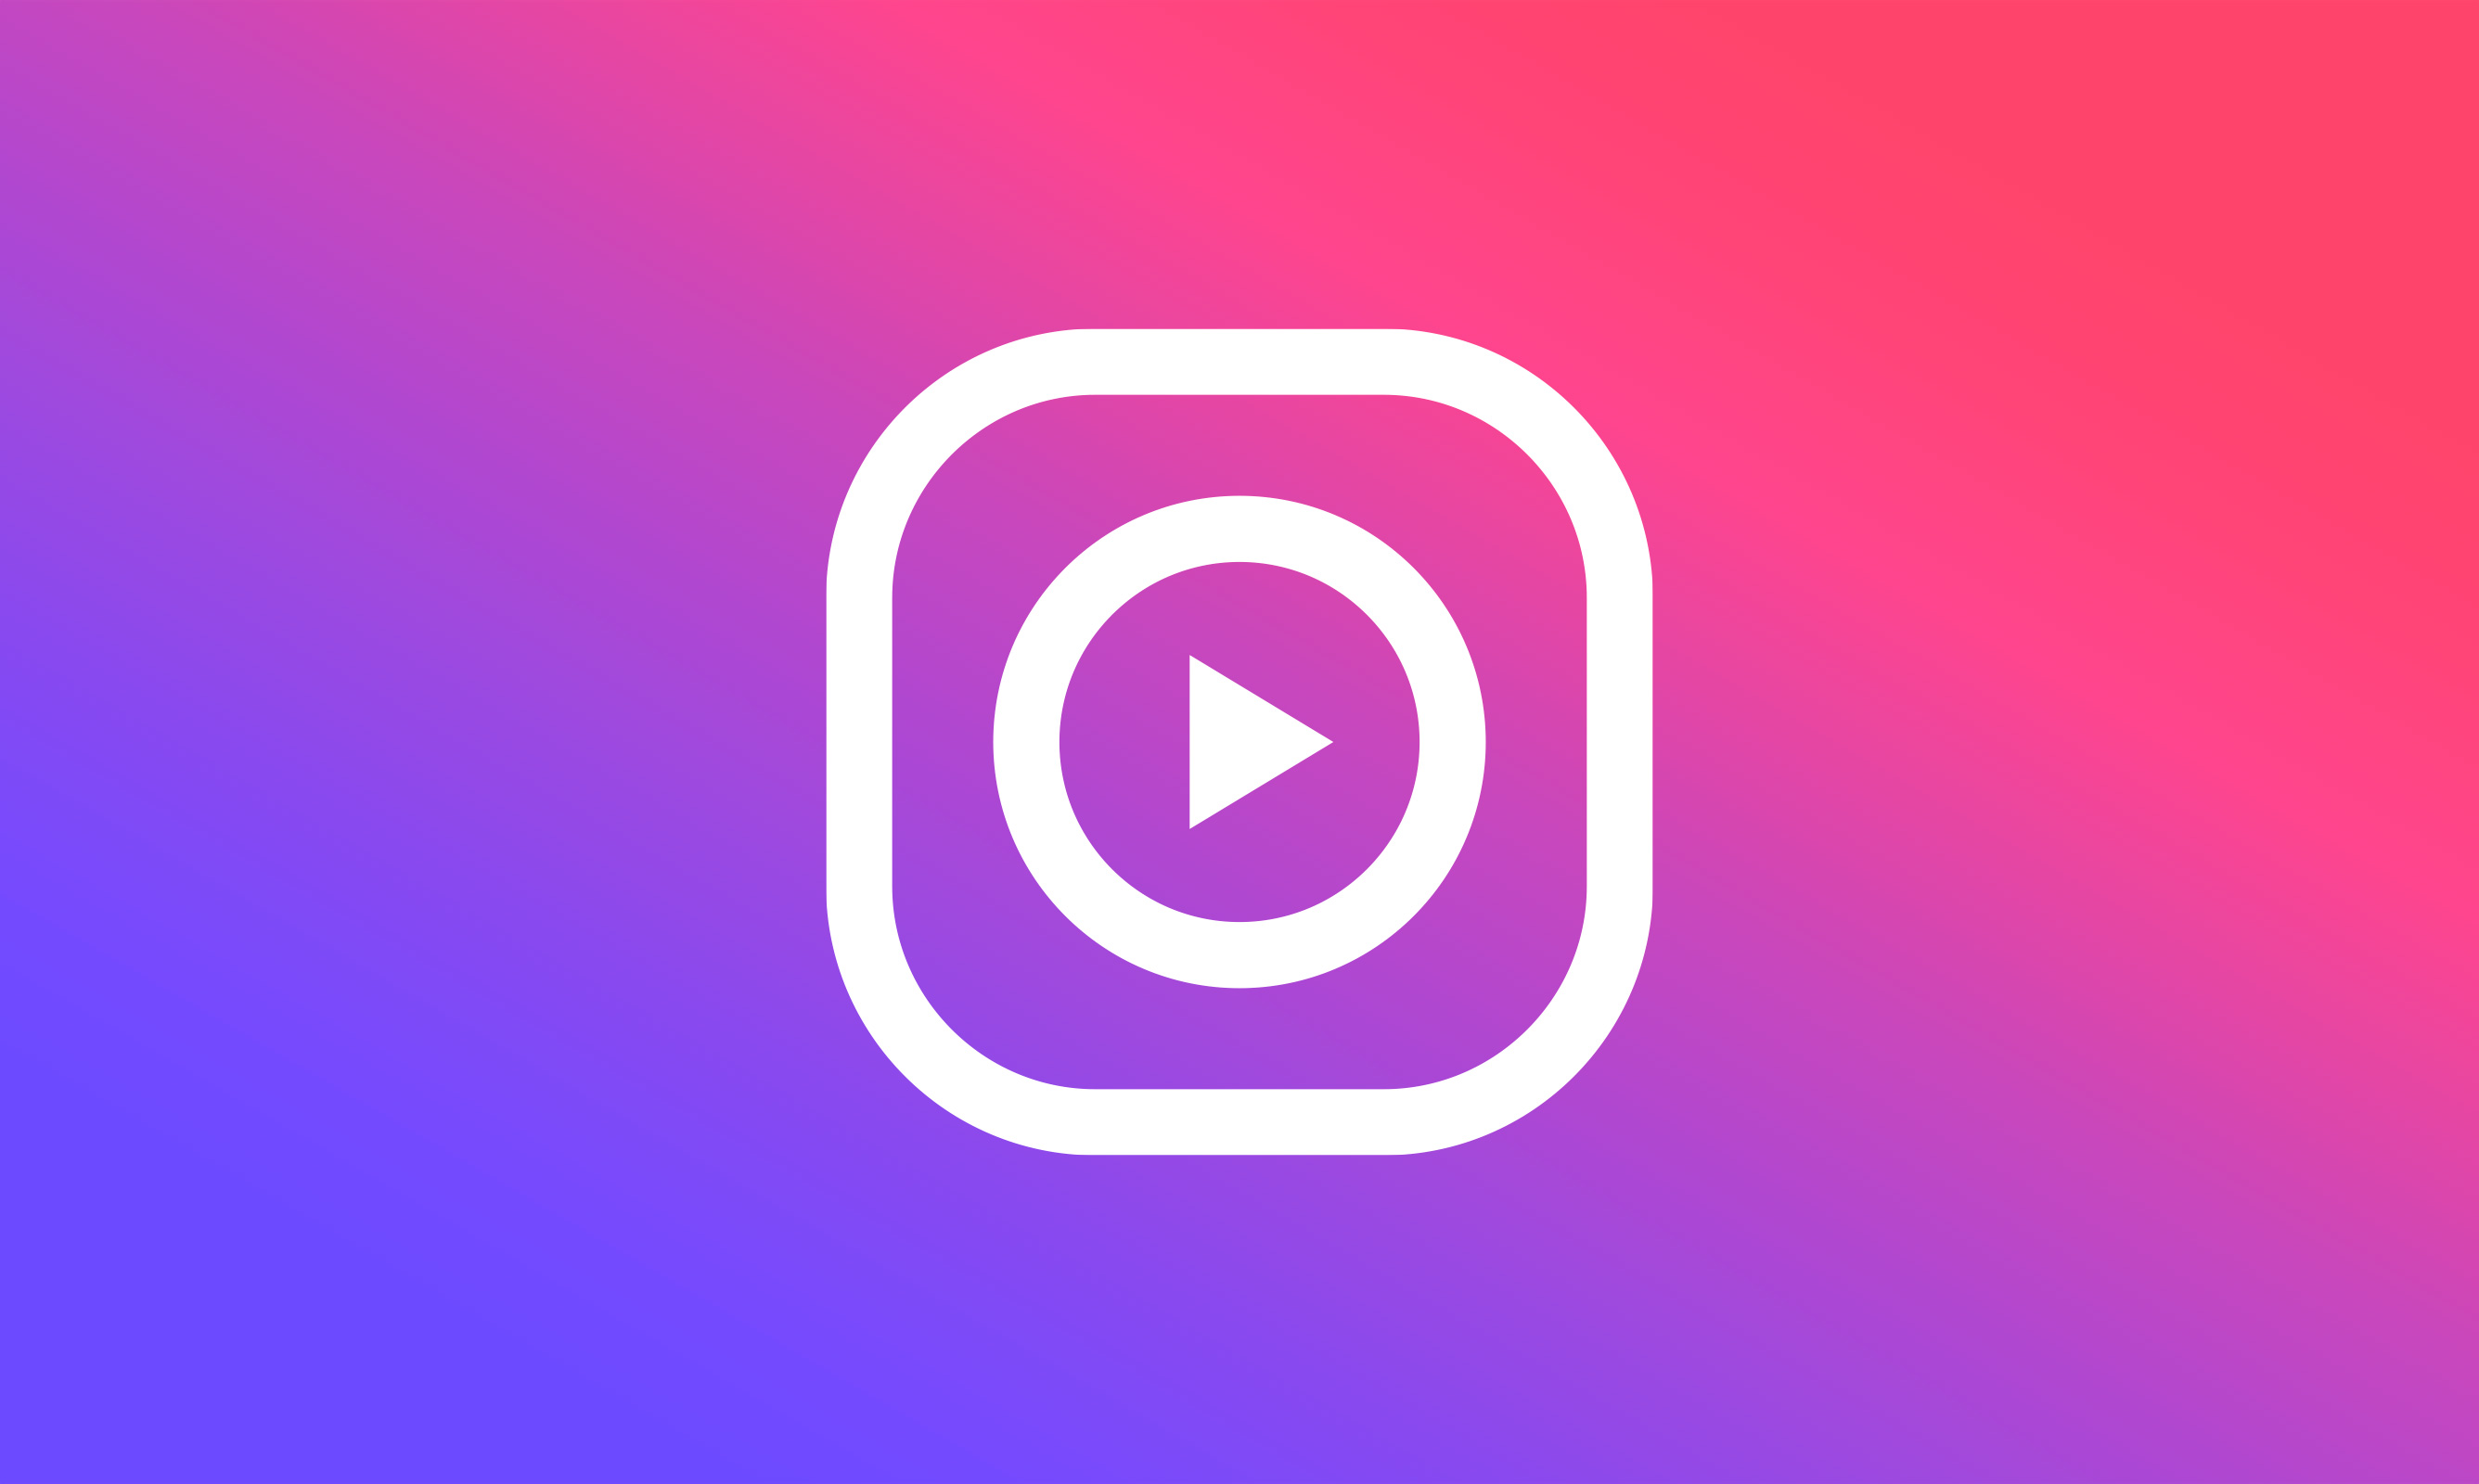 download instagram video on mac